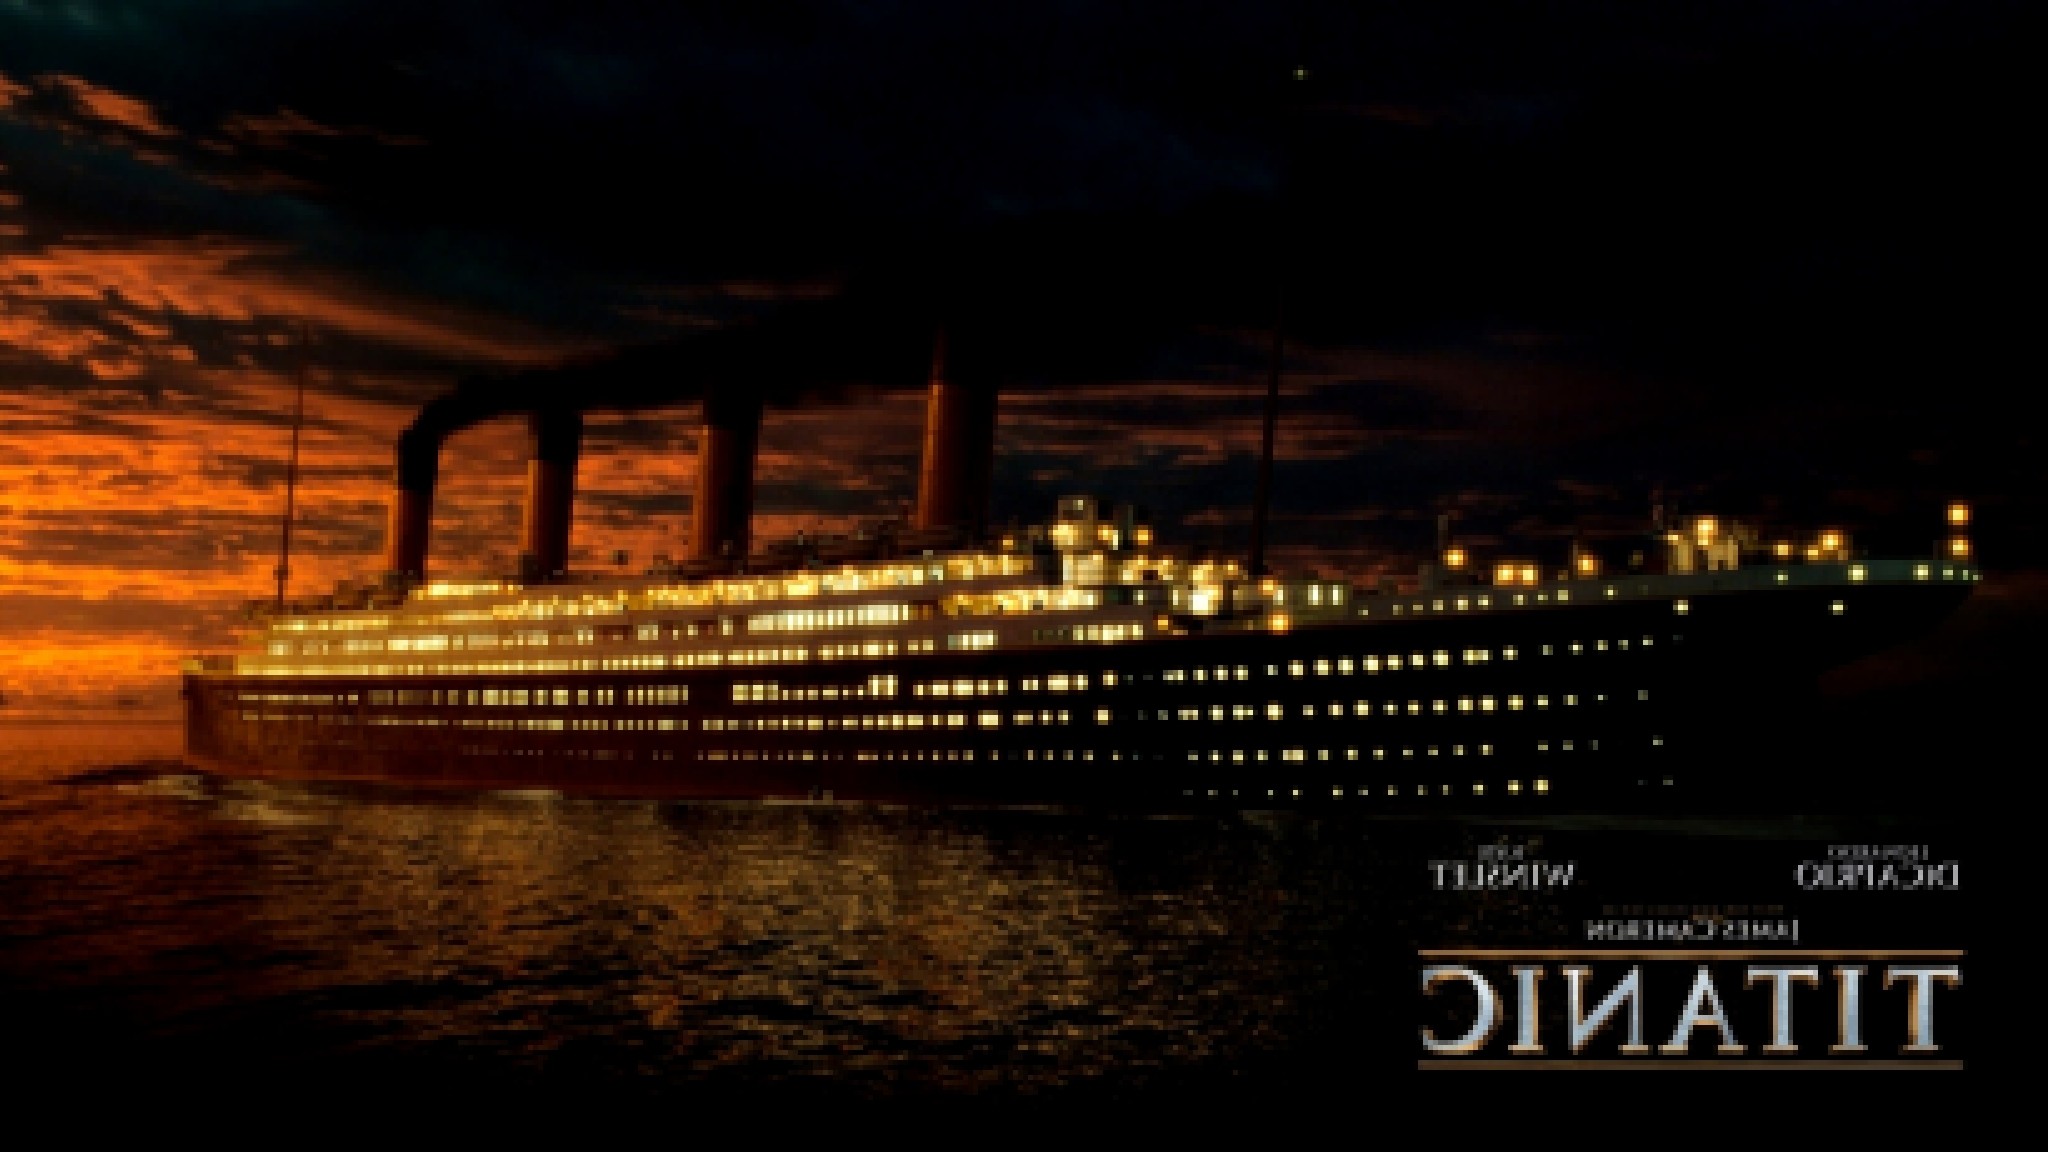 2048x1152 titanic ship wallpaper hd - photo #11